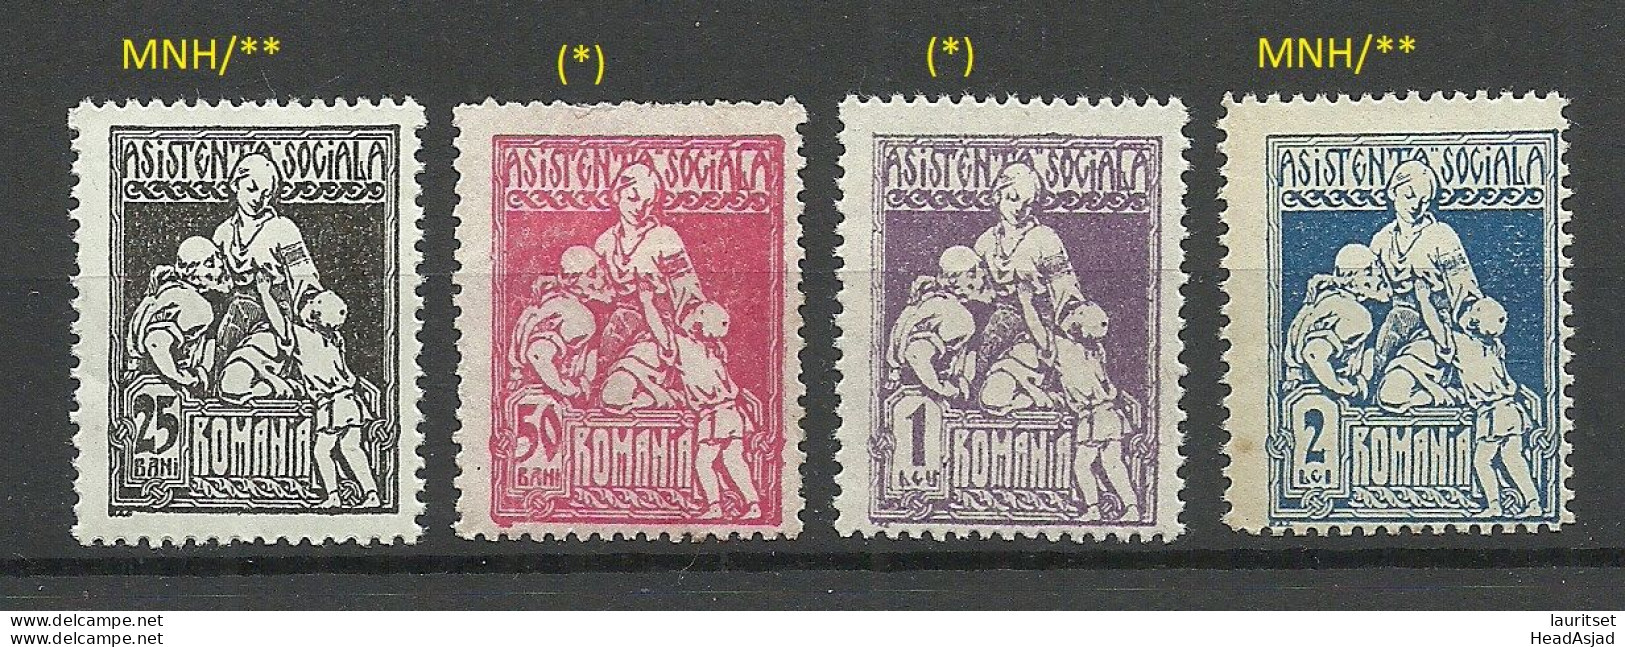 ROMANIA ROMANA 1921 Asistenta Sociala Charity Charite Wohlfahrt Krankenpflege Tax Steuermarken, 4 Stamps, Unused MNH/(*) - Neufs